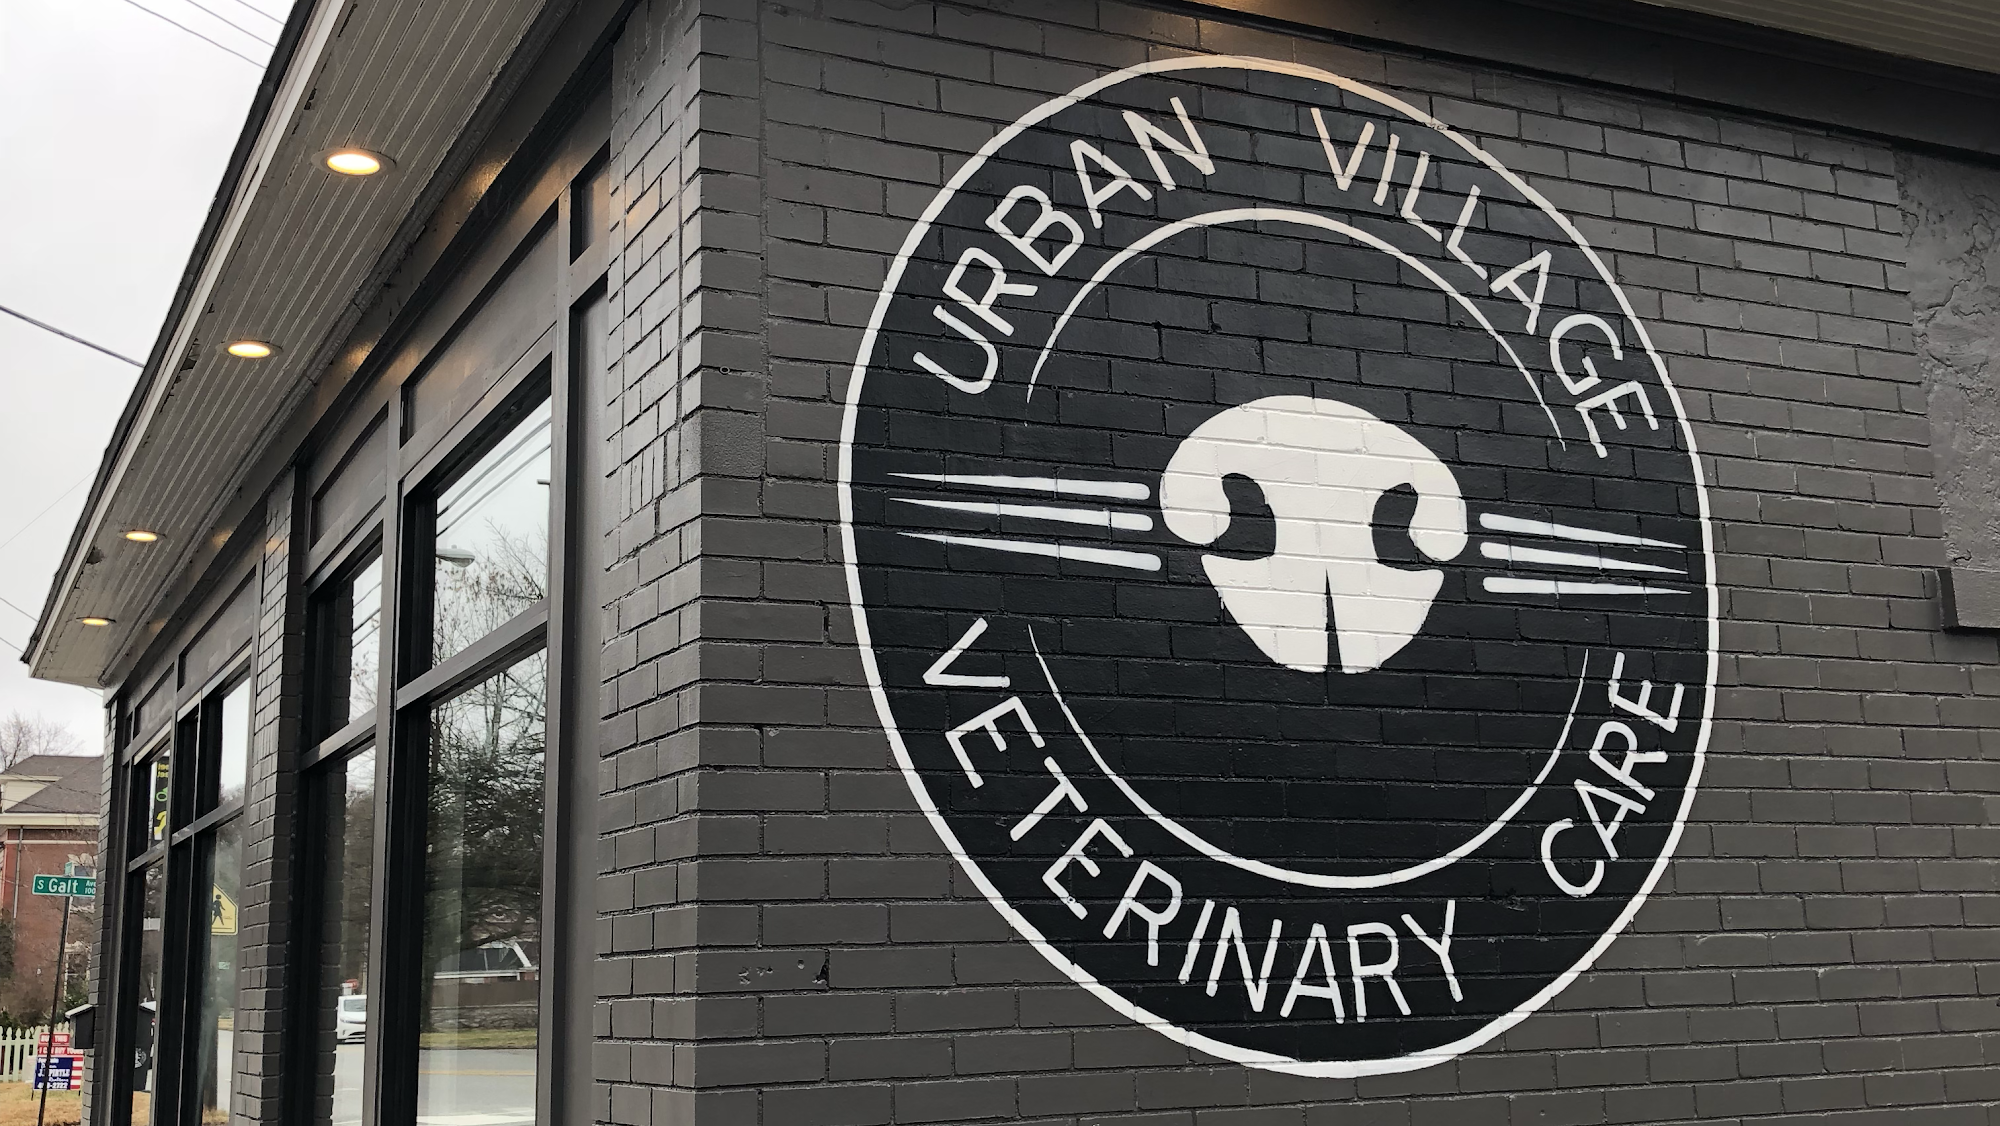 Urban Village Veterinary Care